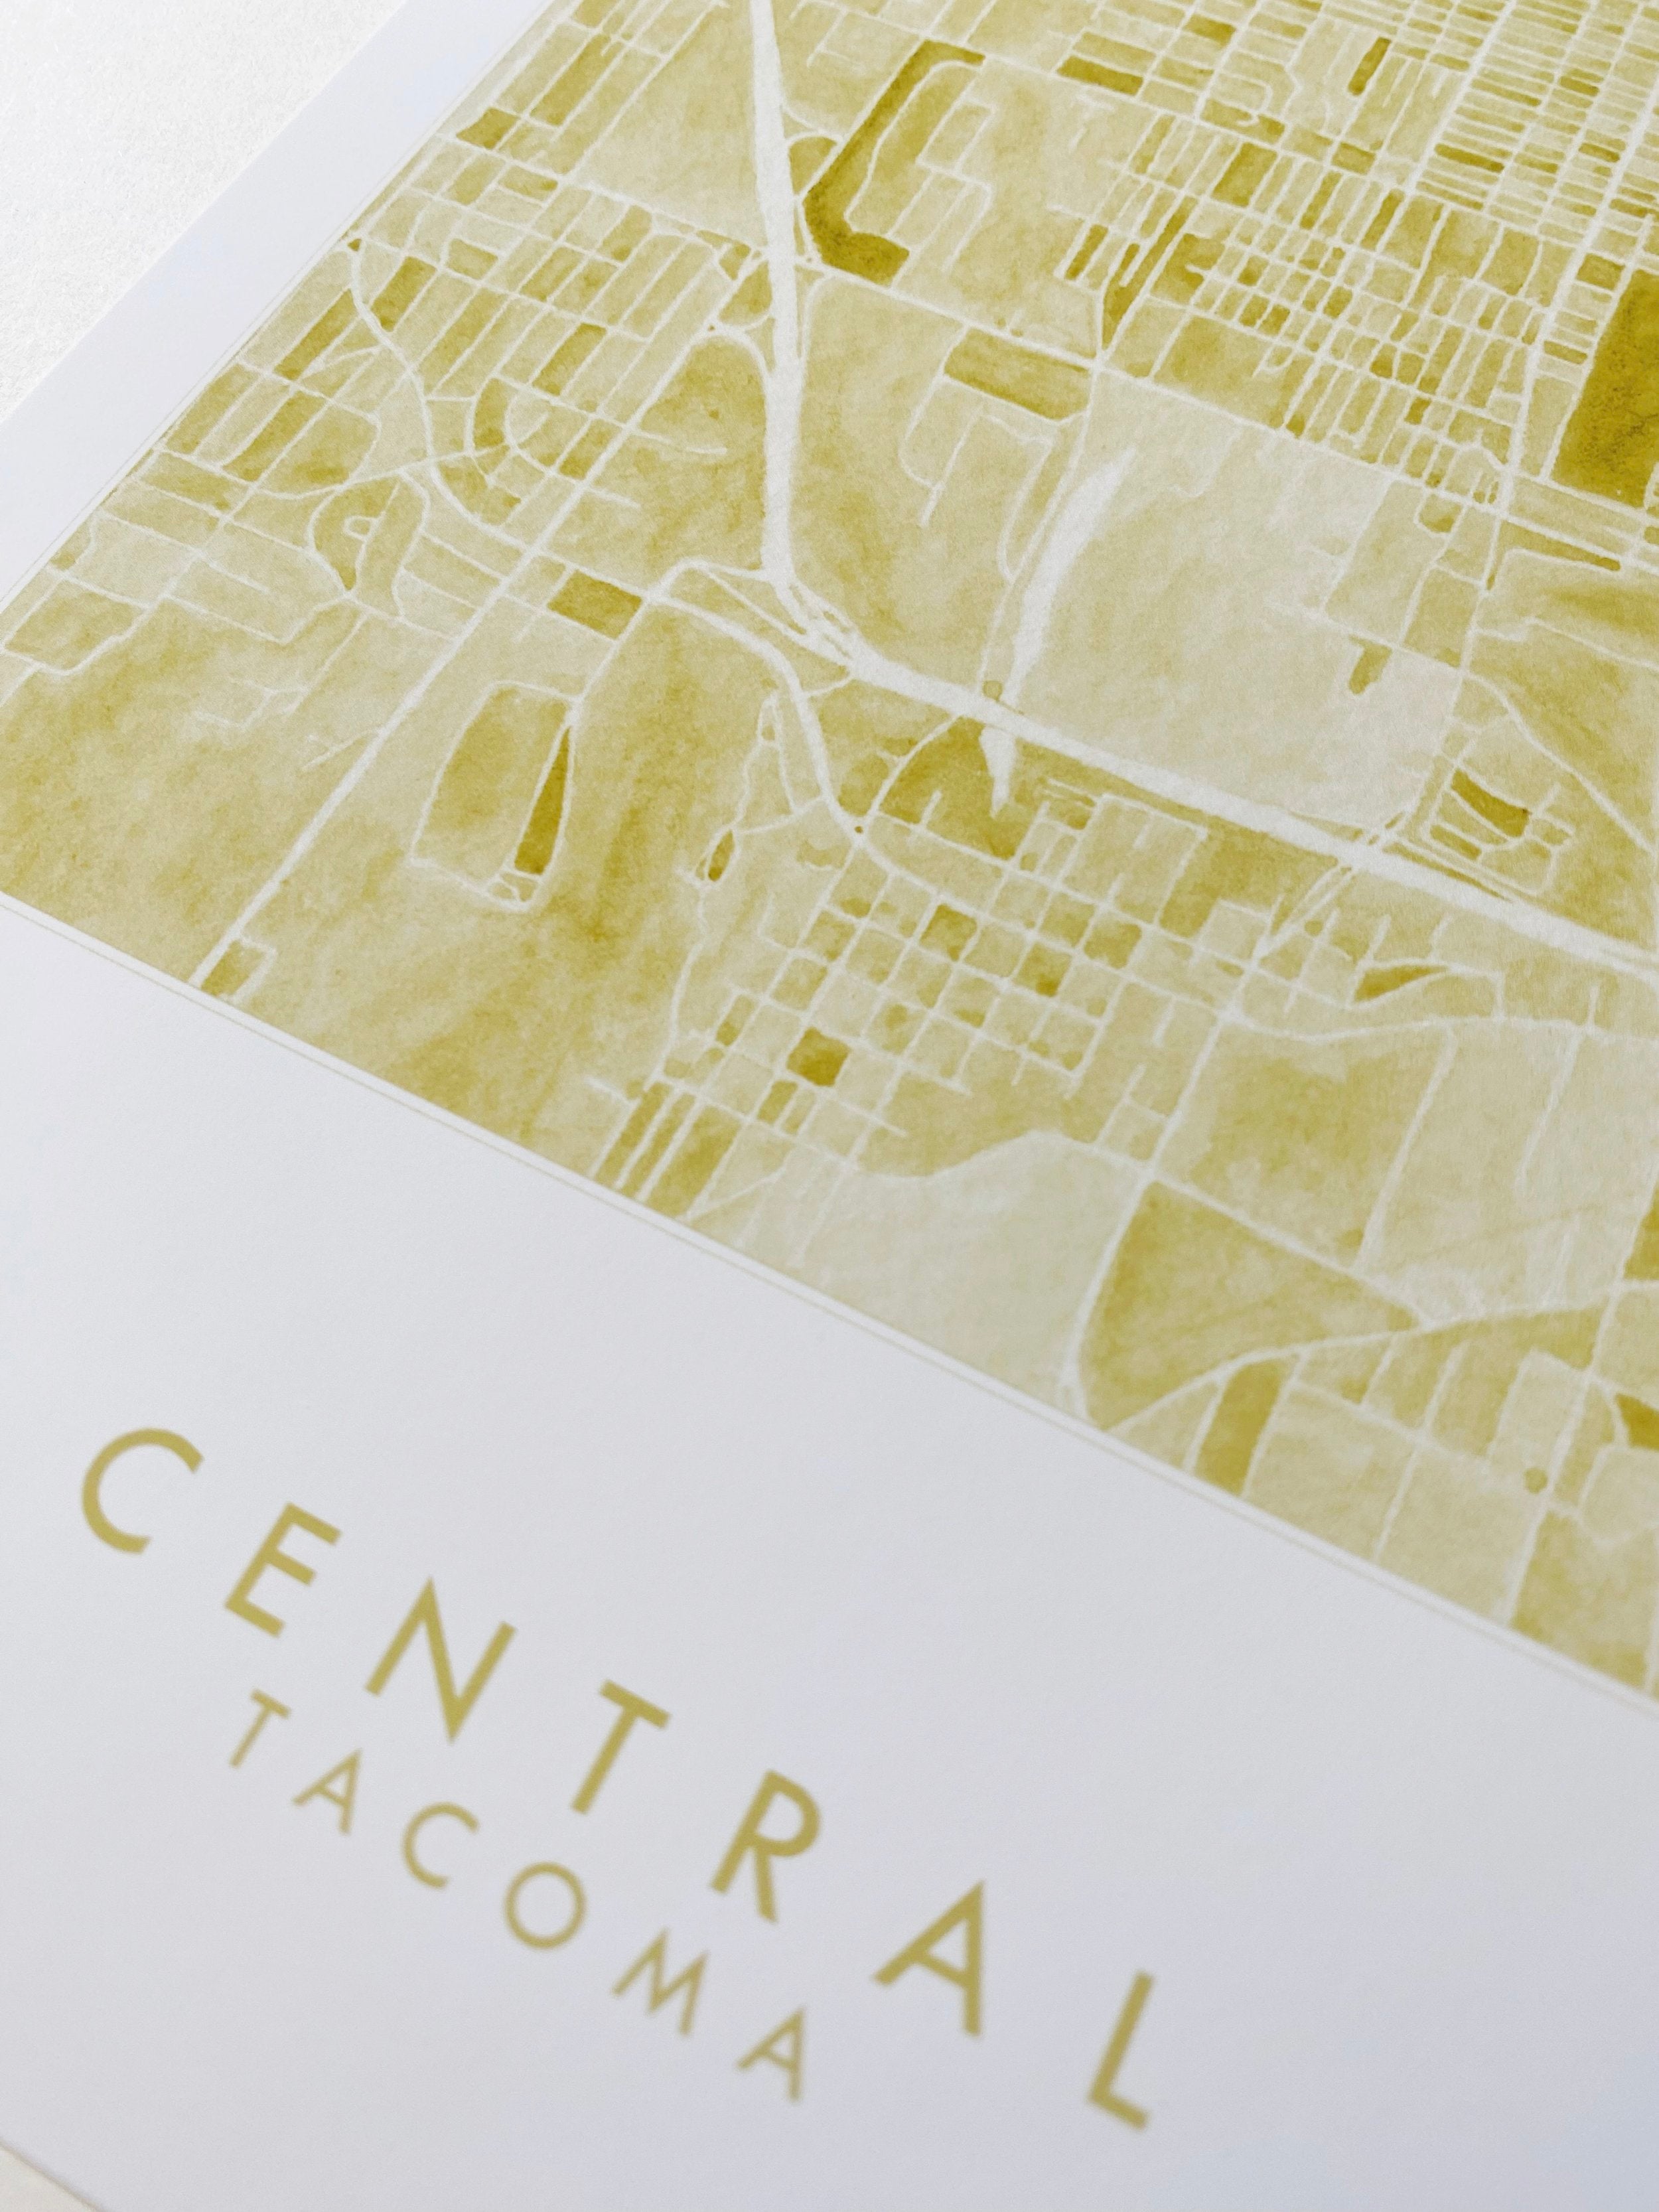 Central TACOMA Neighborhood Watercolor Map: PRINT